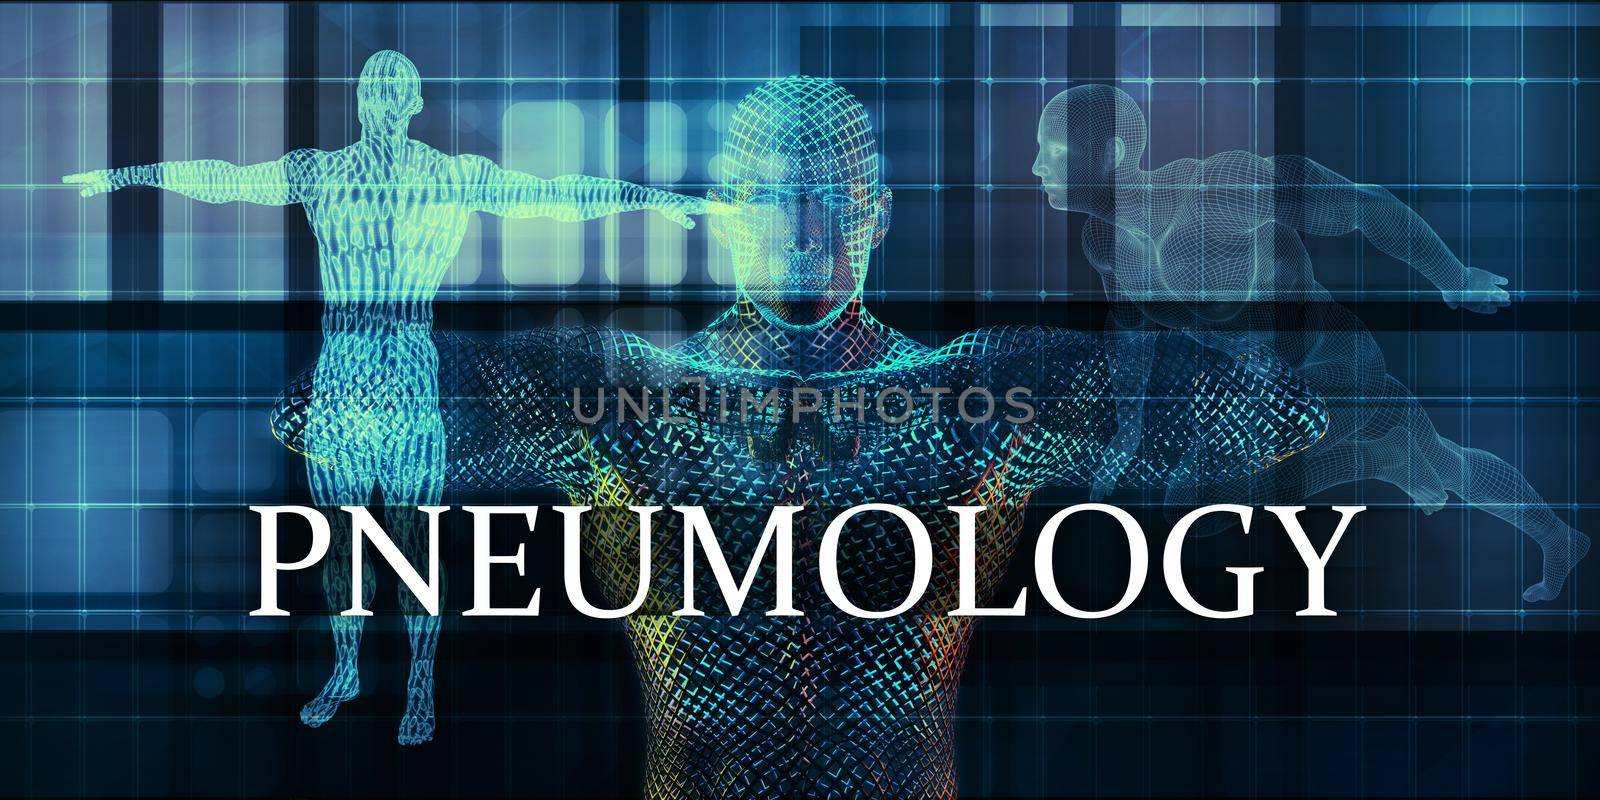 Pneumology by kentoh